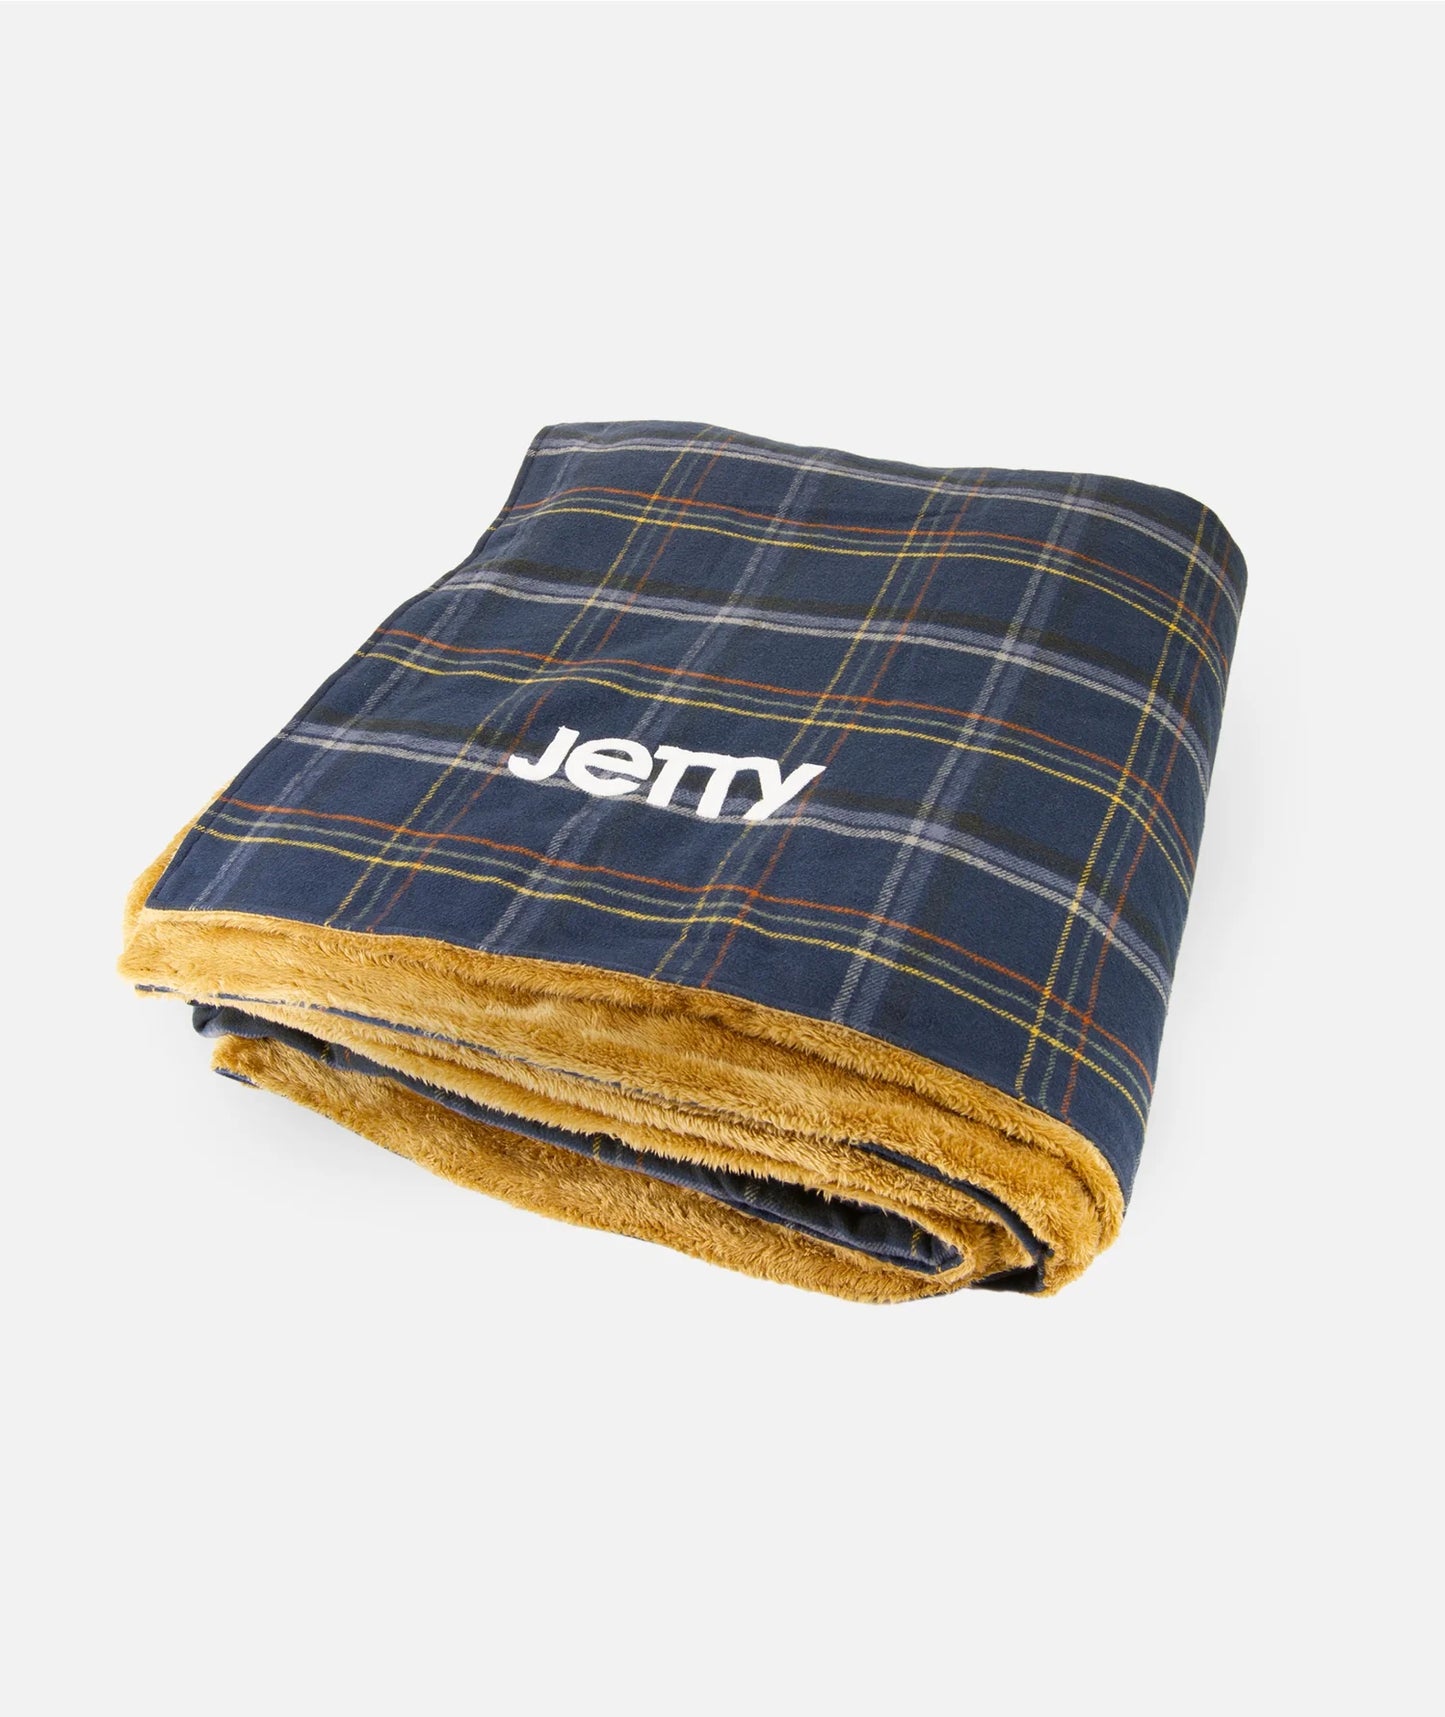 Jetty Fireside Blanket - Navy